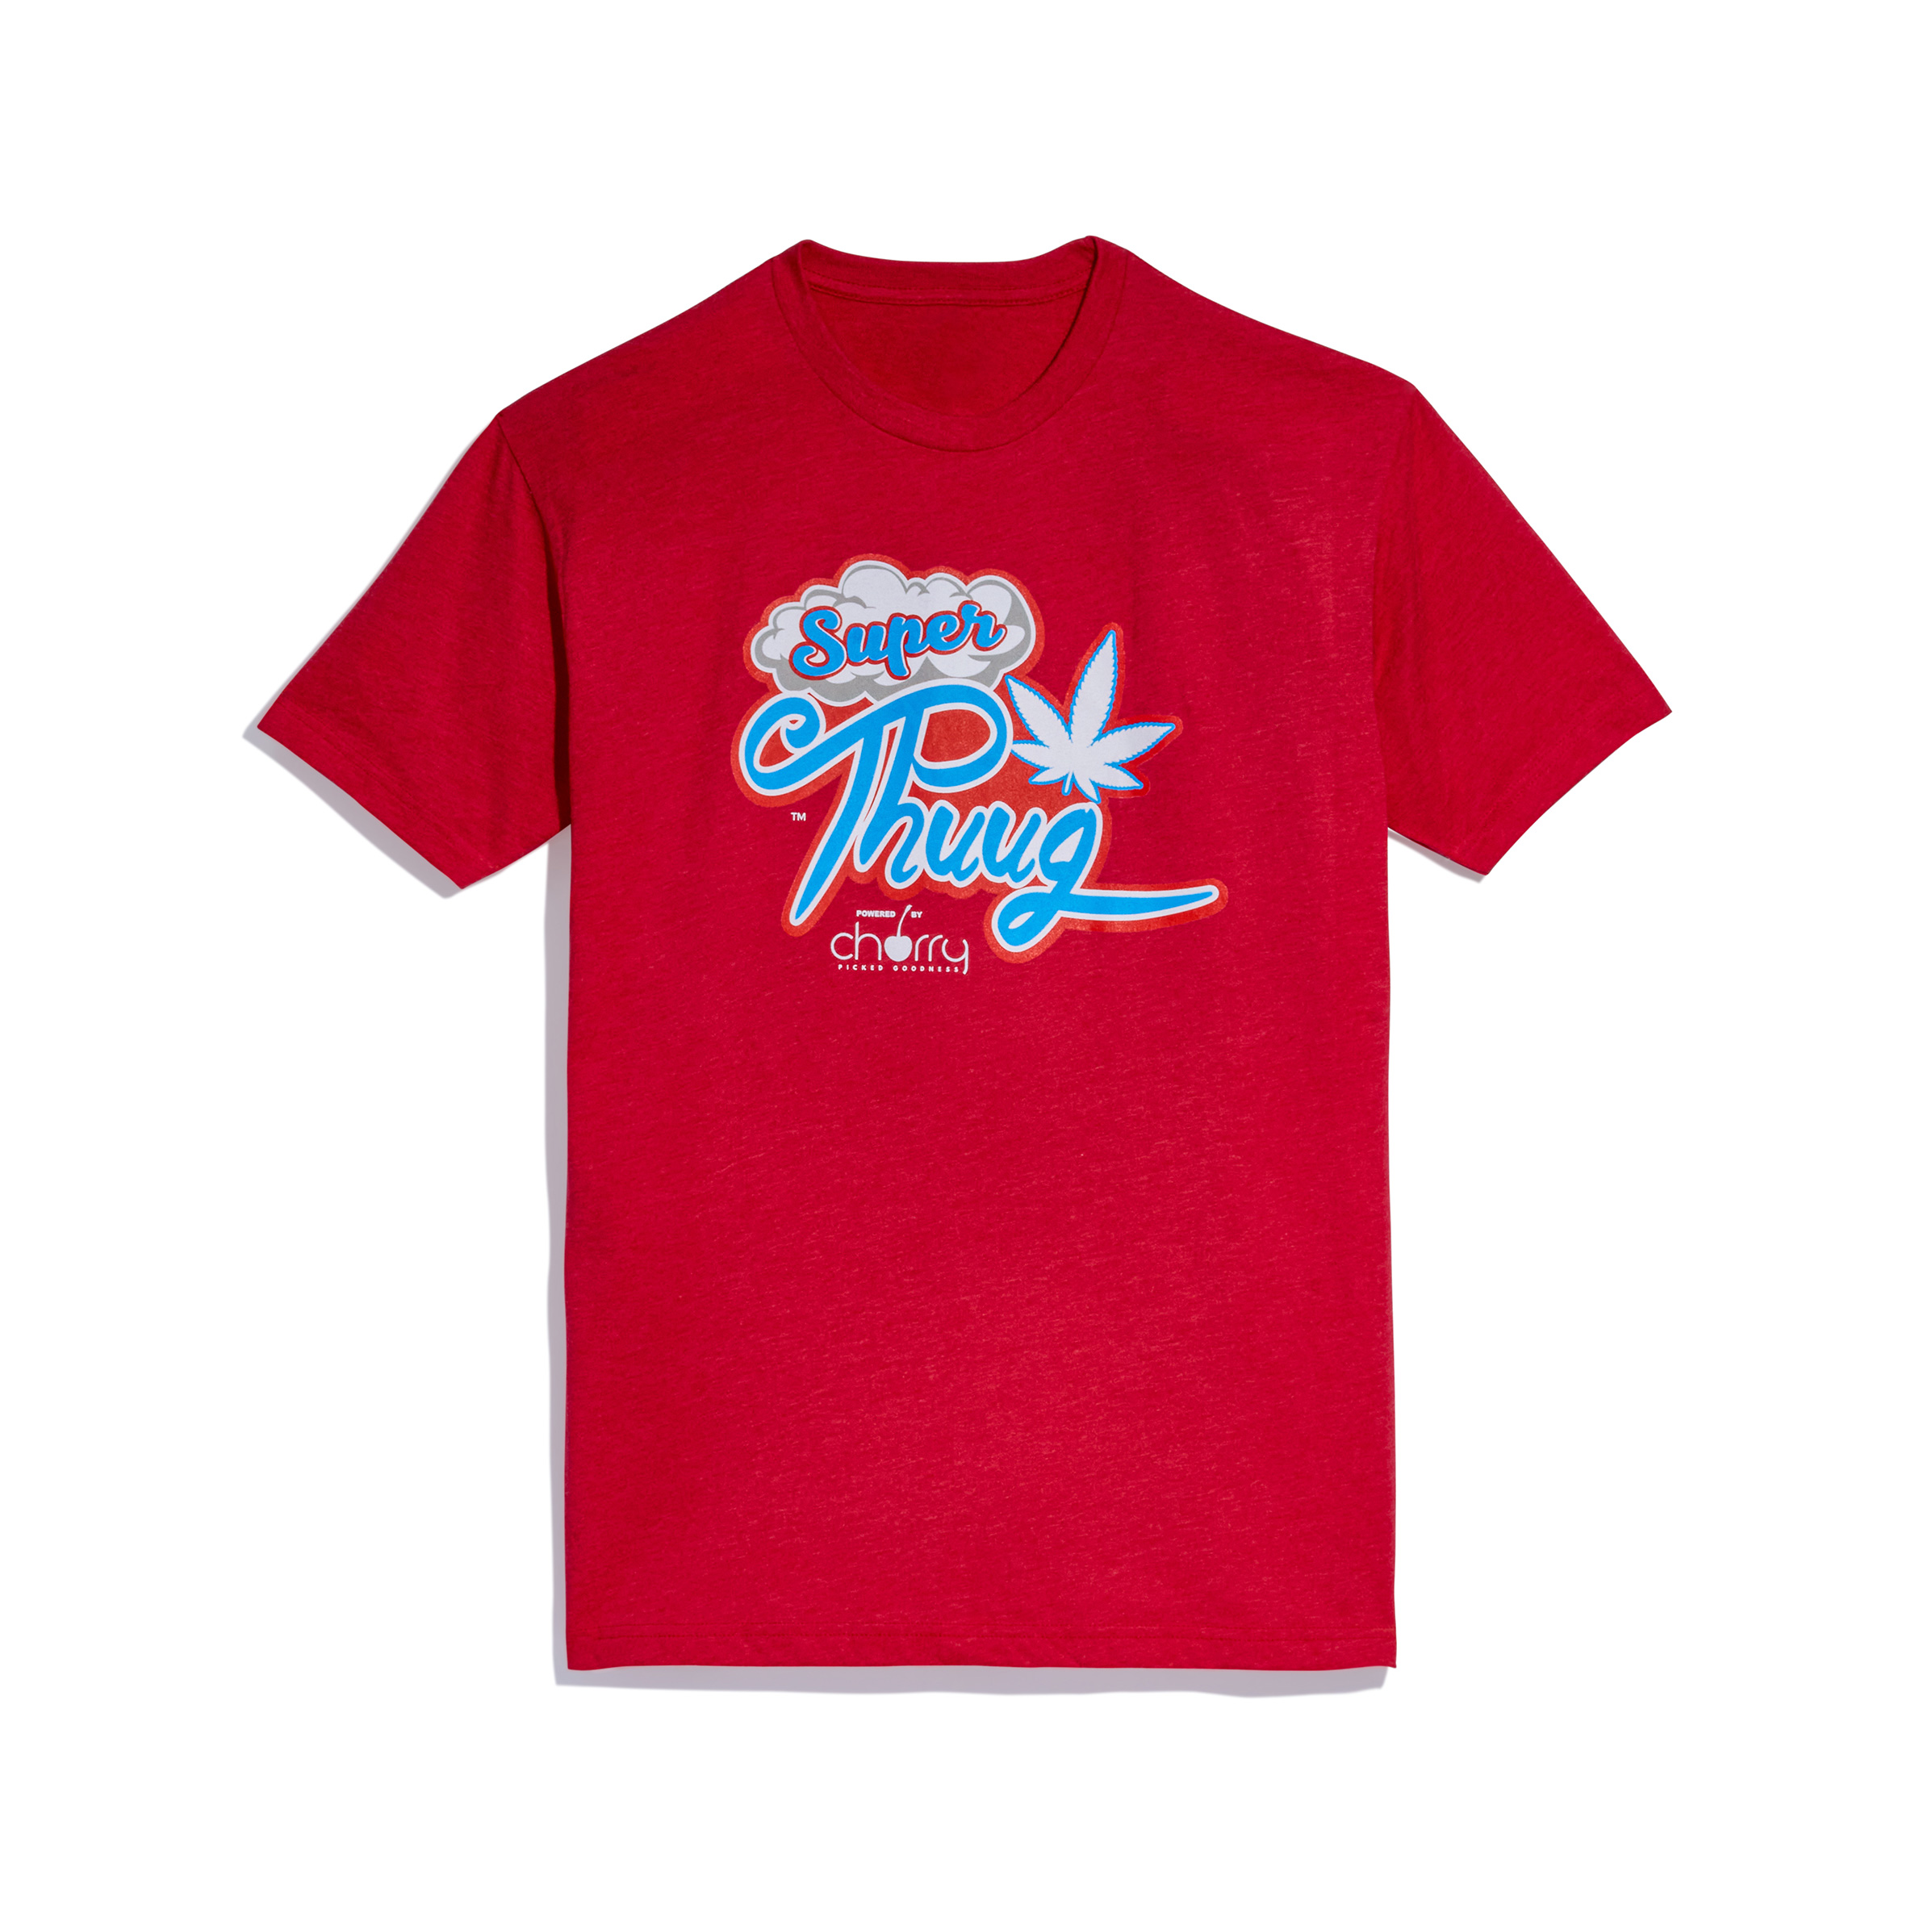 Superthuug Shirt by Cherry